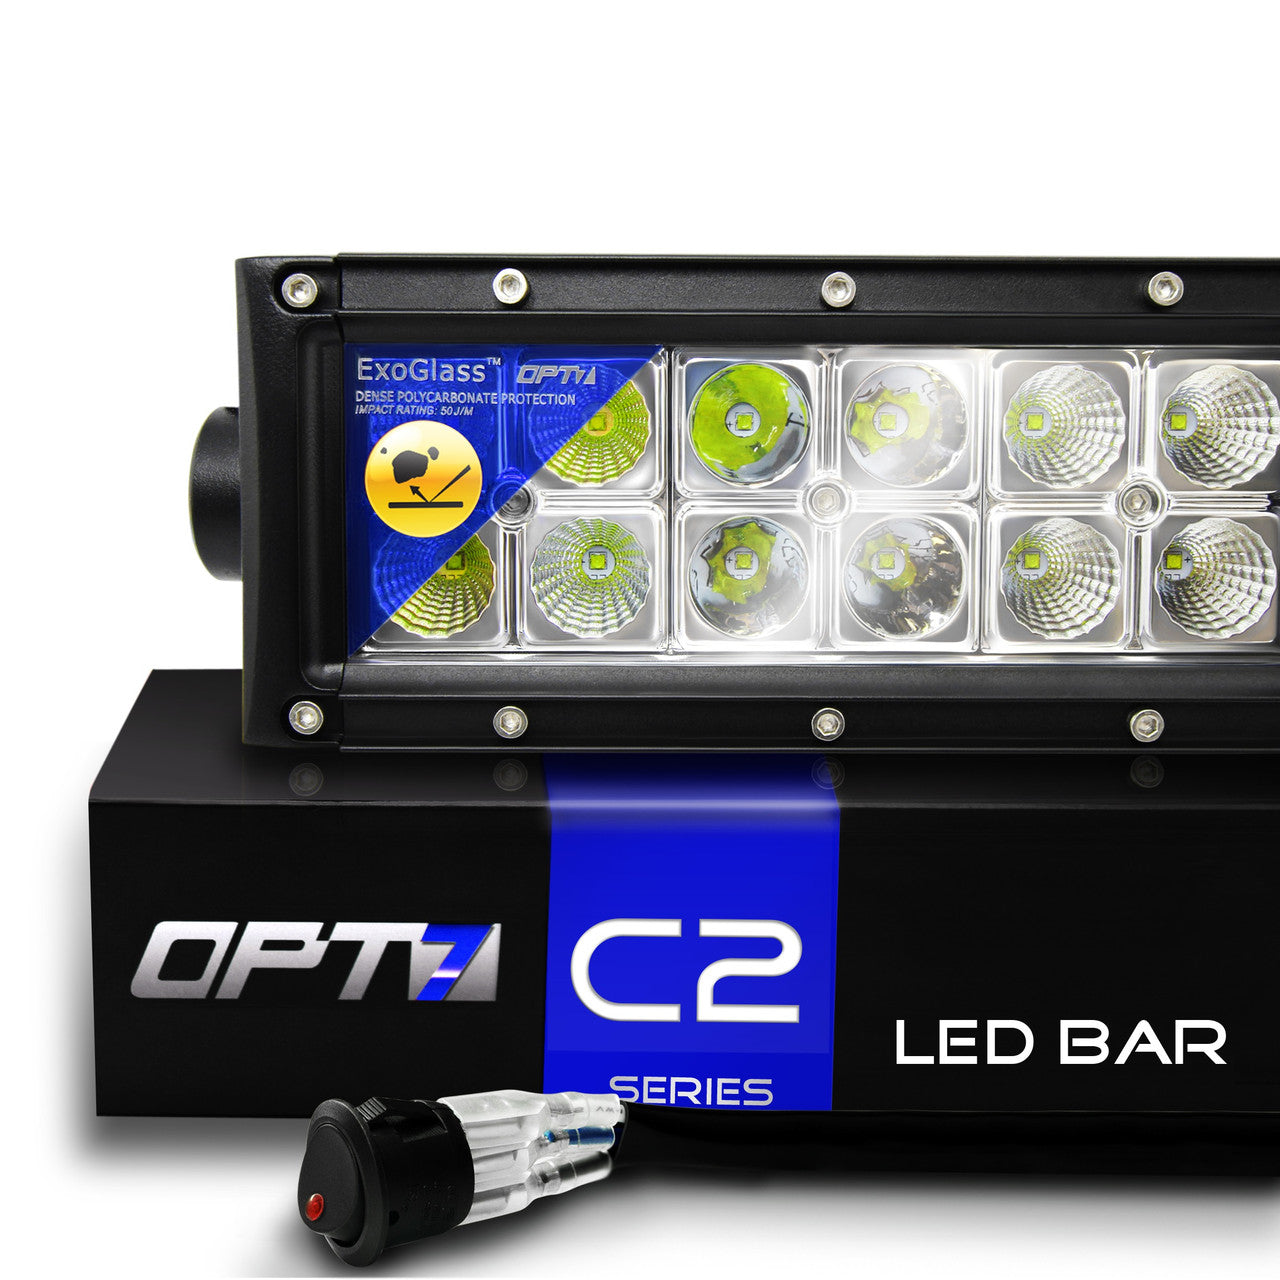 C2 Os Series: LED Light Bar